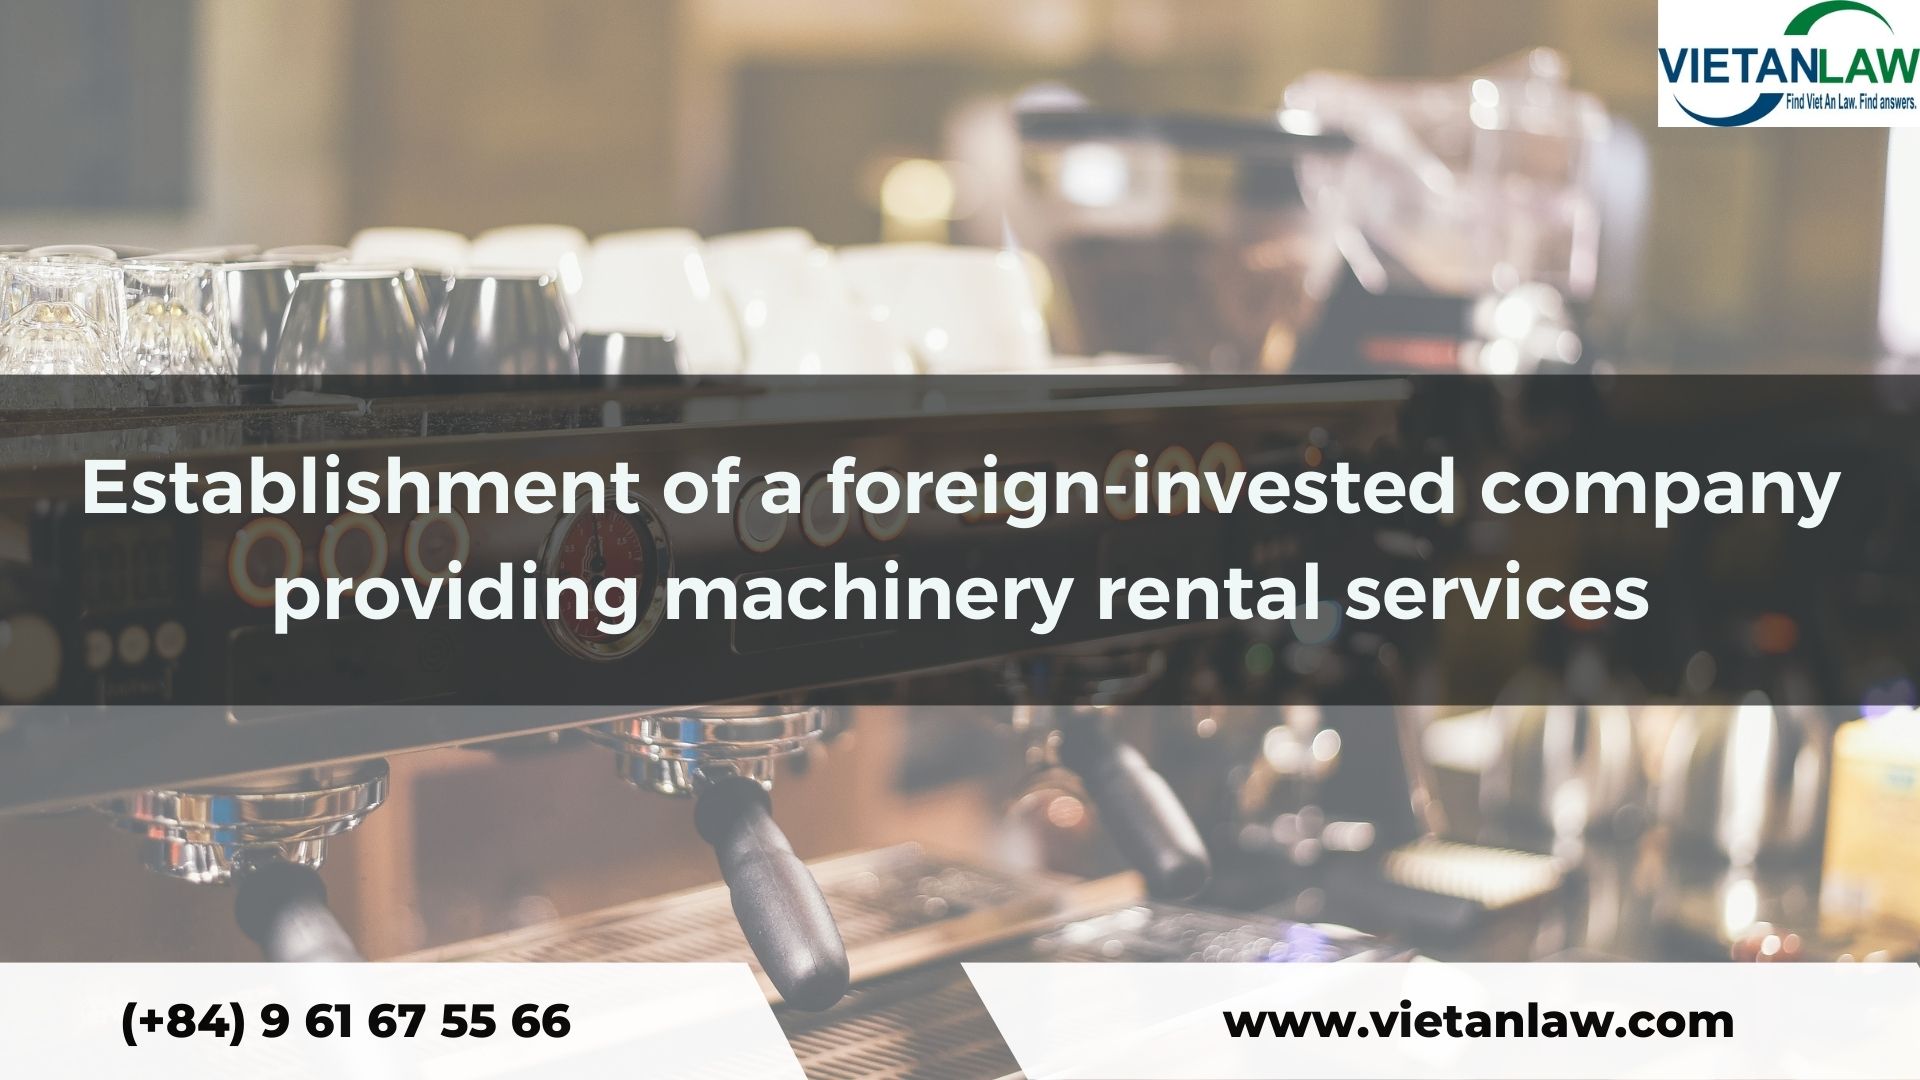 Establish a company providing machinery rental services in Vietnam